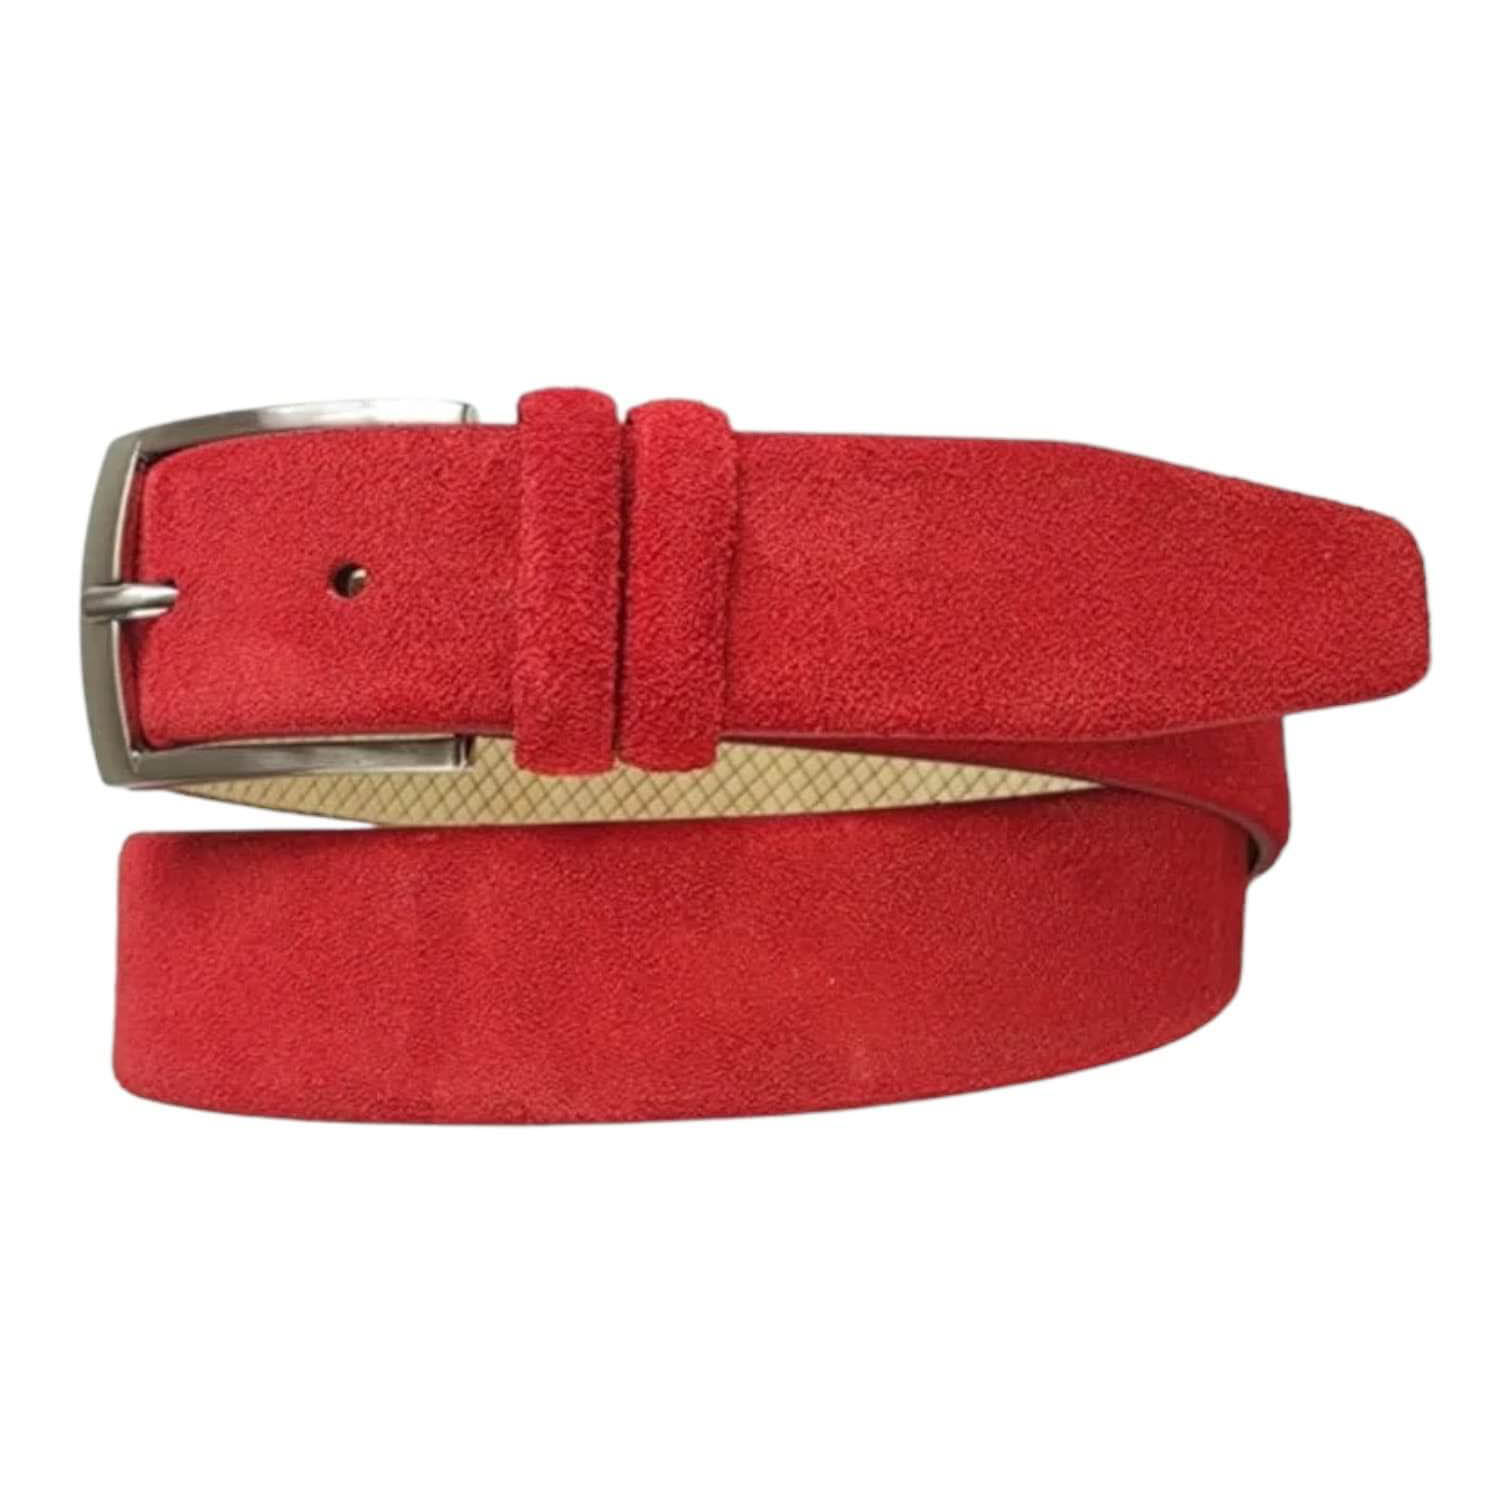 Buy Red Suede Suede Leather Belt Casual - LeatherBeltsOnline.com